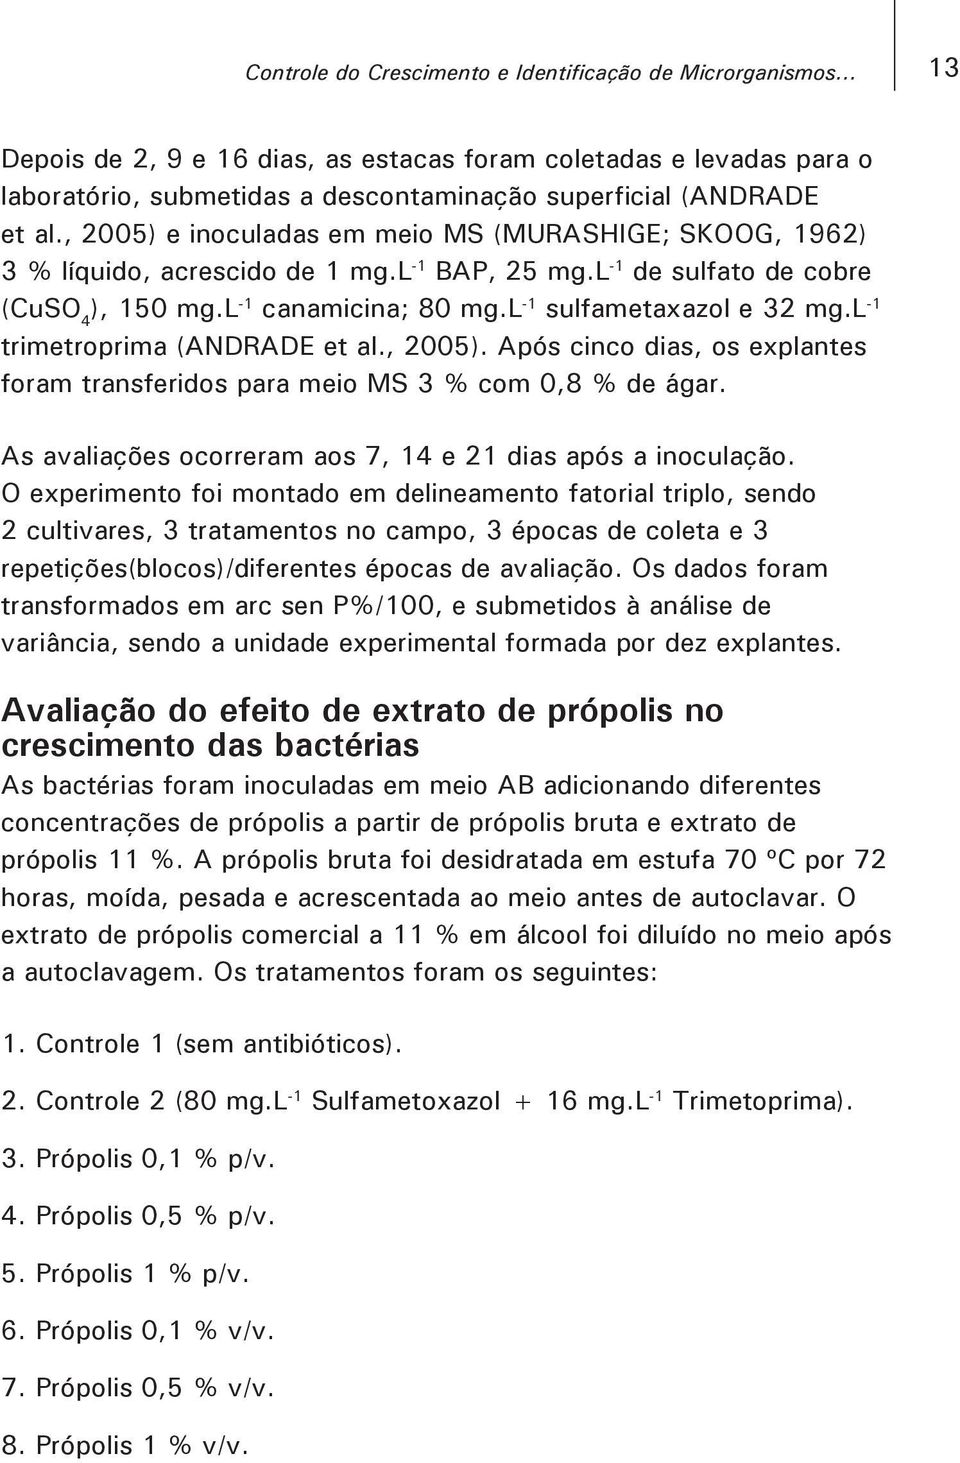 , 2005) e inoculadas em meio MS (MURASHIGE; SKOOG, 1962) 3 % líquido, acrescido de 1 mg.l -1 BAP, 25 mg.l -1 de sulfato de cobre (CuSO 4 ), 150 mg.l -1 canamicina; 80 mg.l -1 sulfametaxazol e 32 mg.